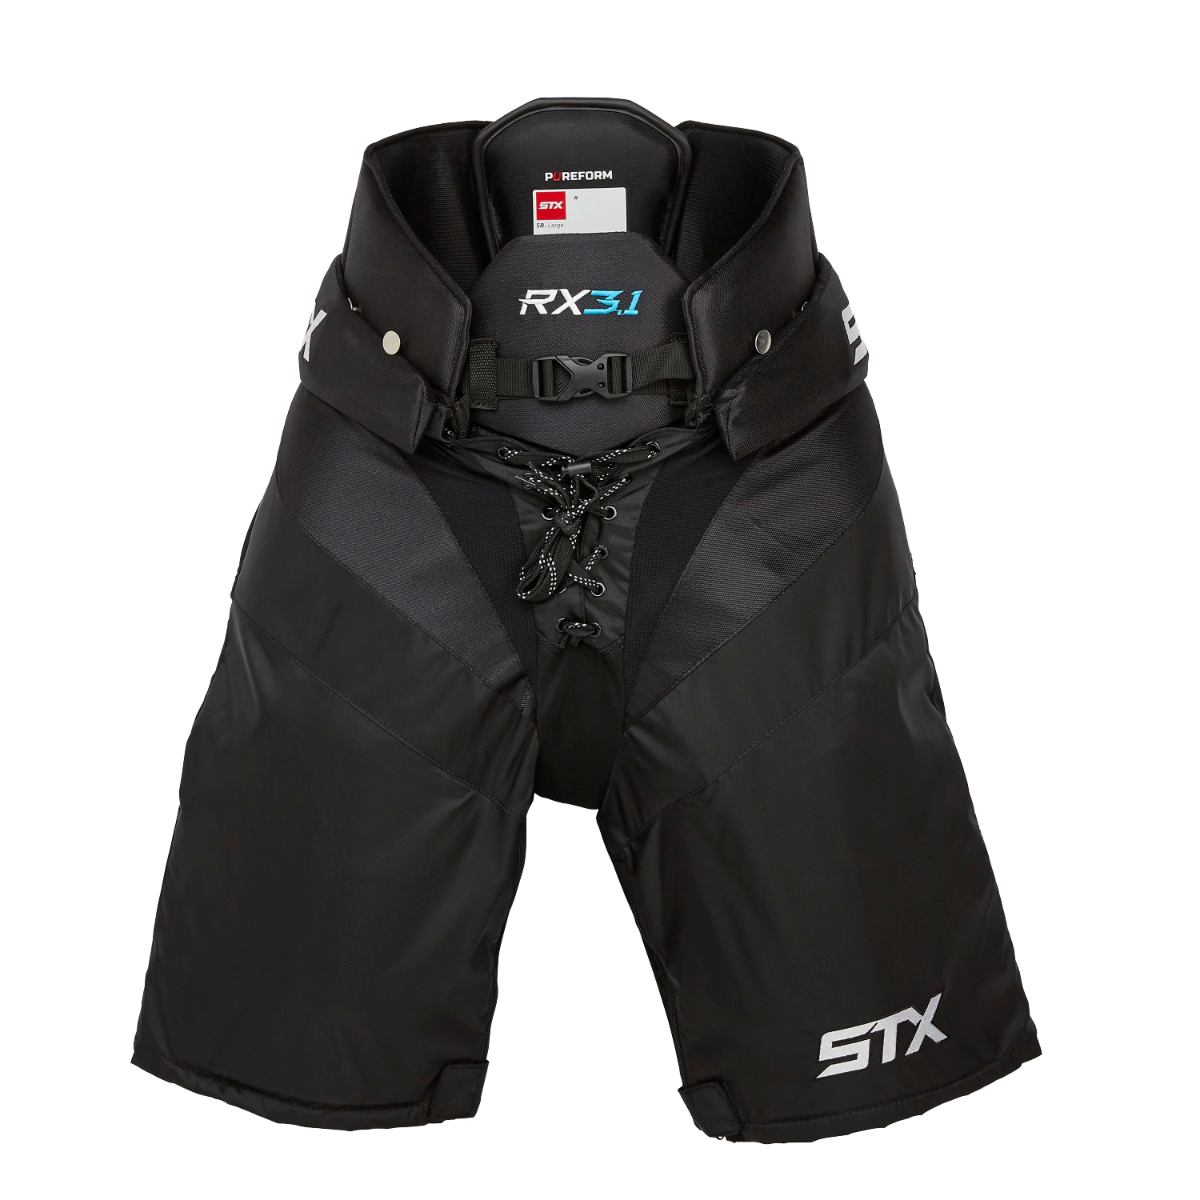 STX Surgeon RX3.1 Ice Hockey Pant